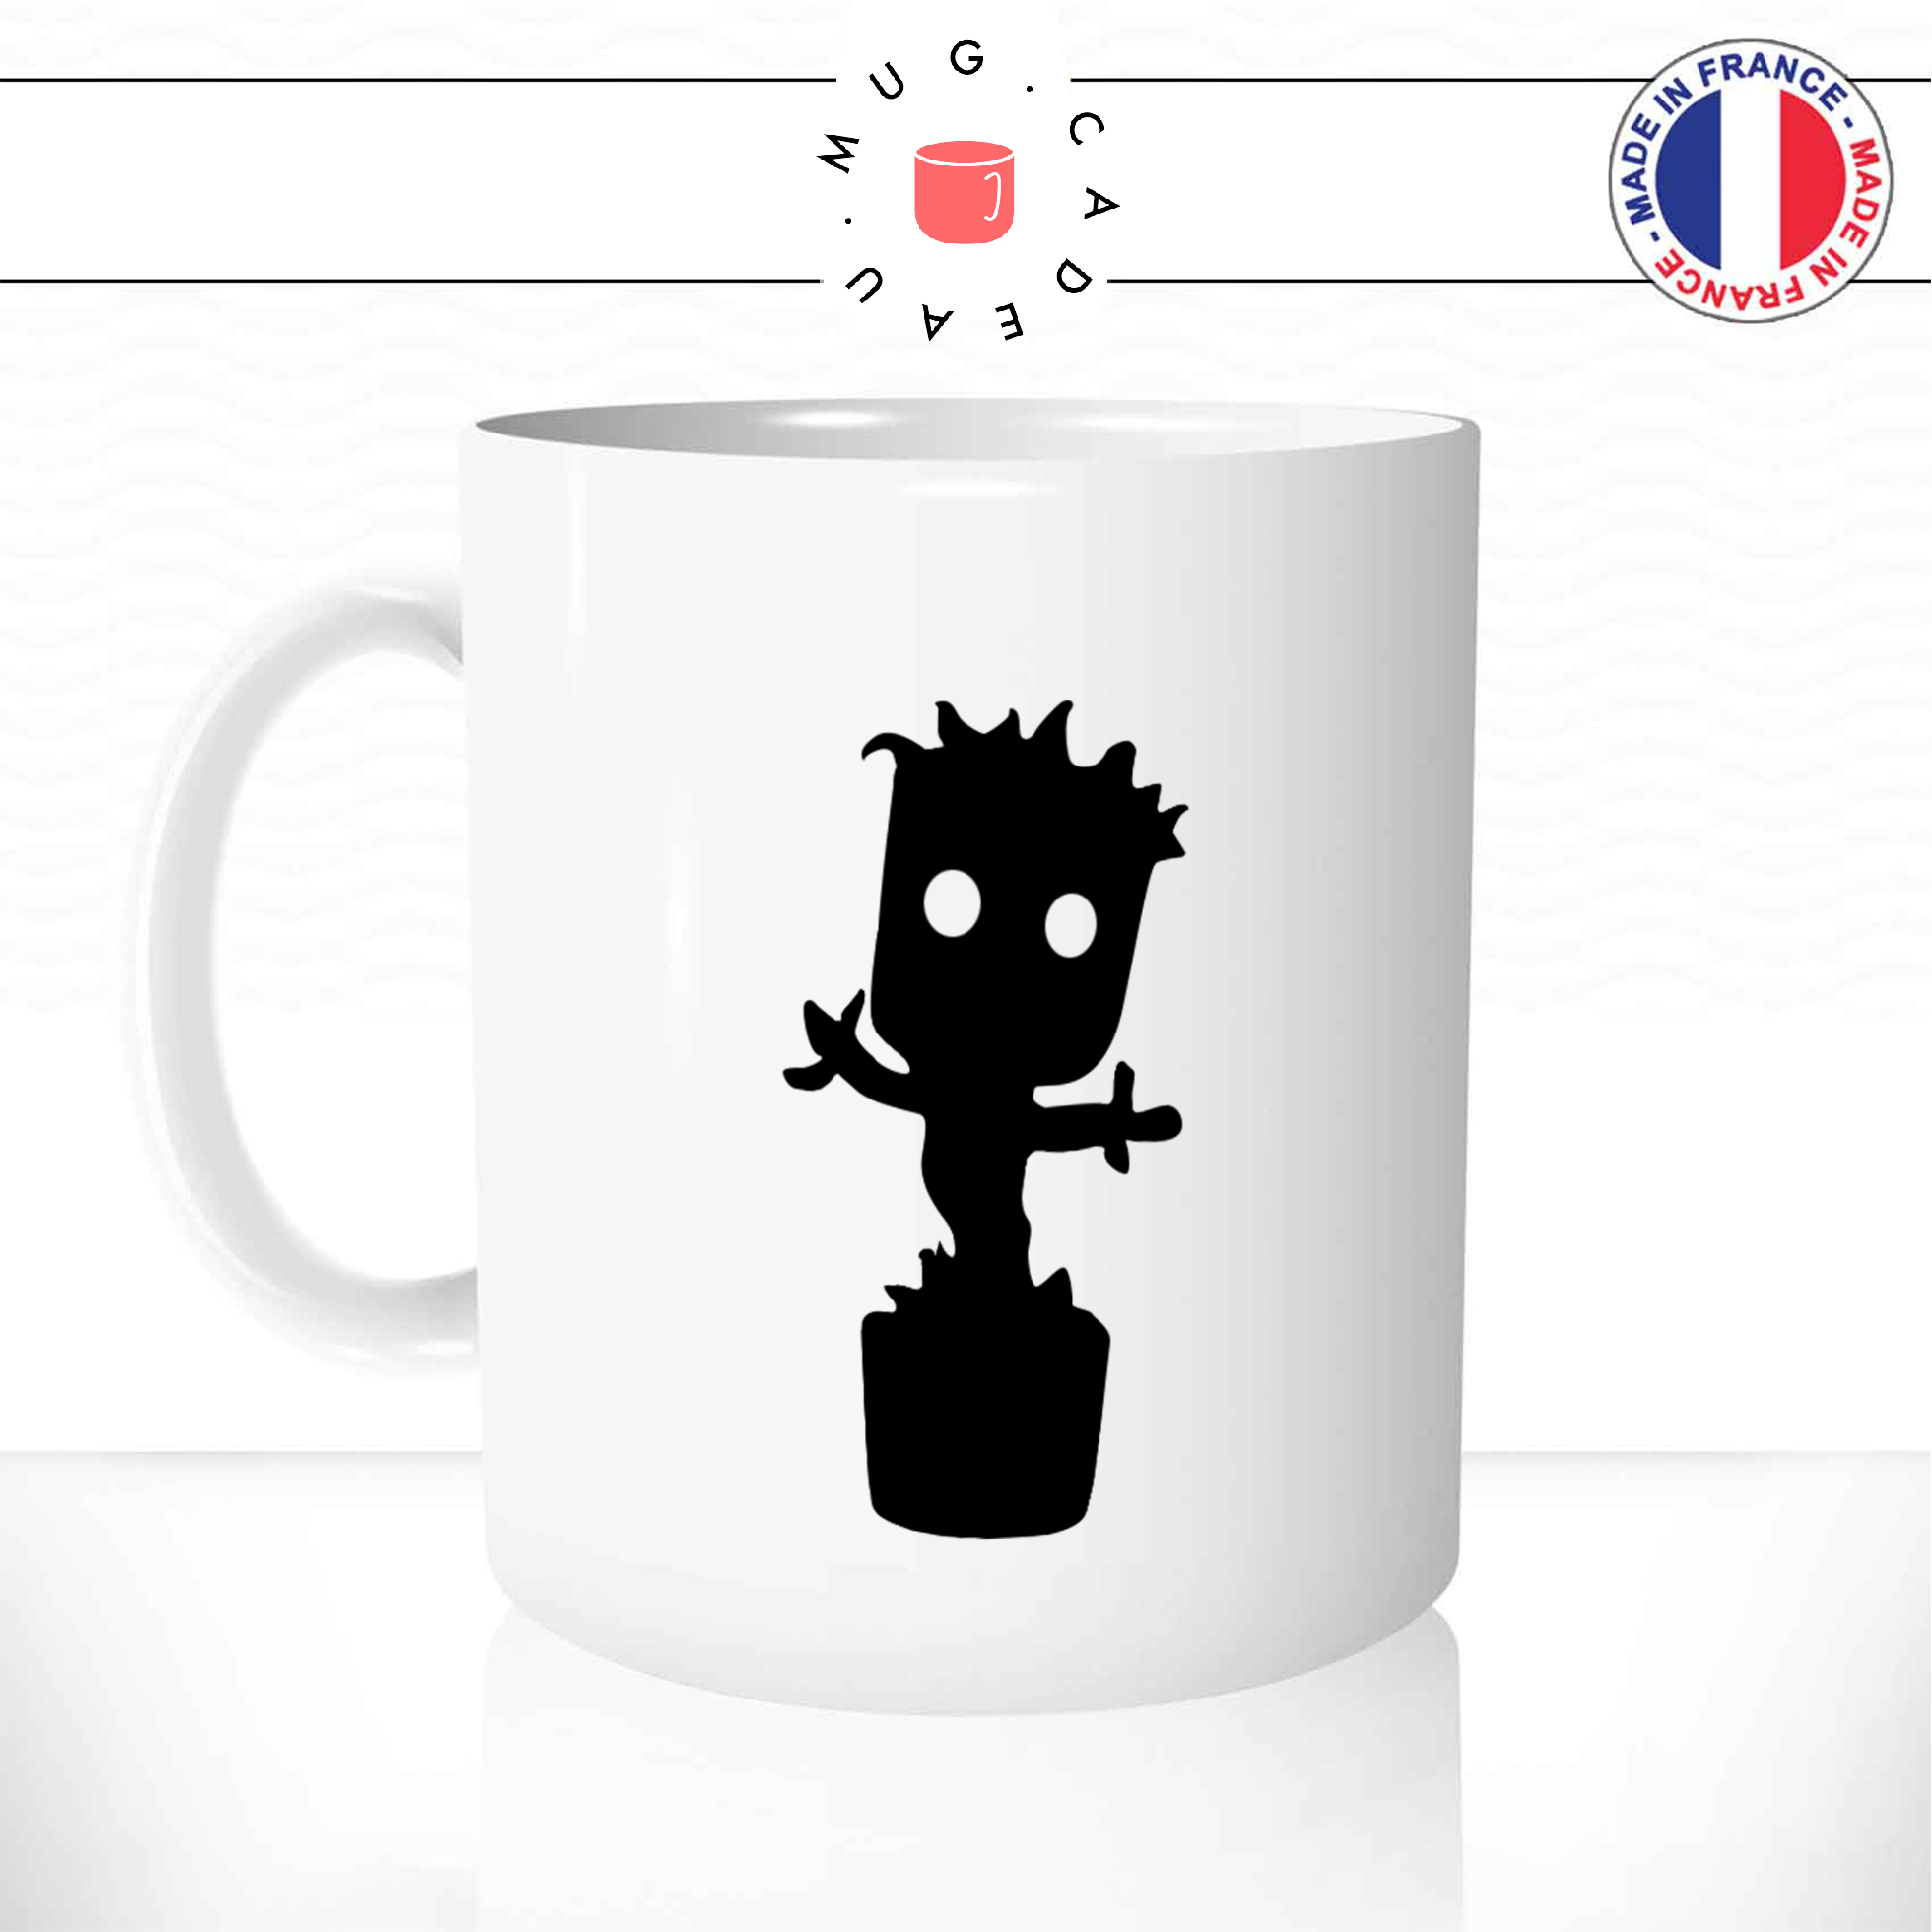 mug-tasse-ref3-gardiens-galaxie-groot-pot-noir-ombre-cafe-the-mugs-tasses-personnalise-anse-gauche